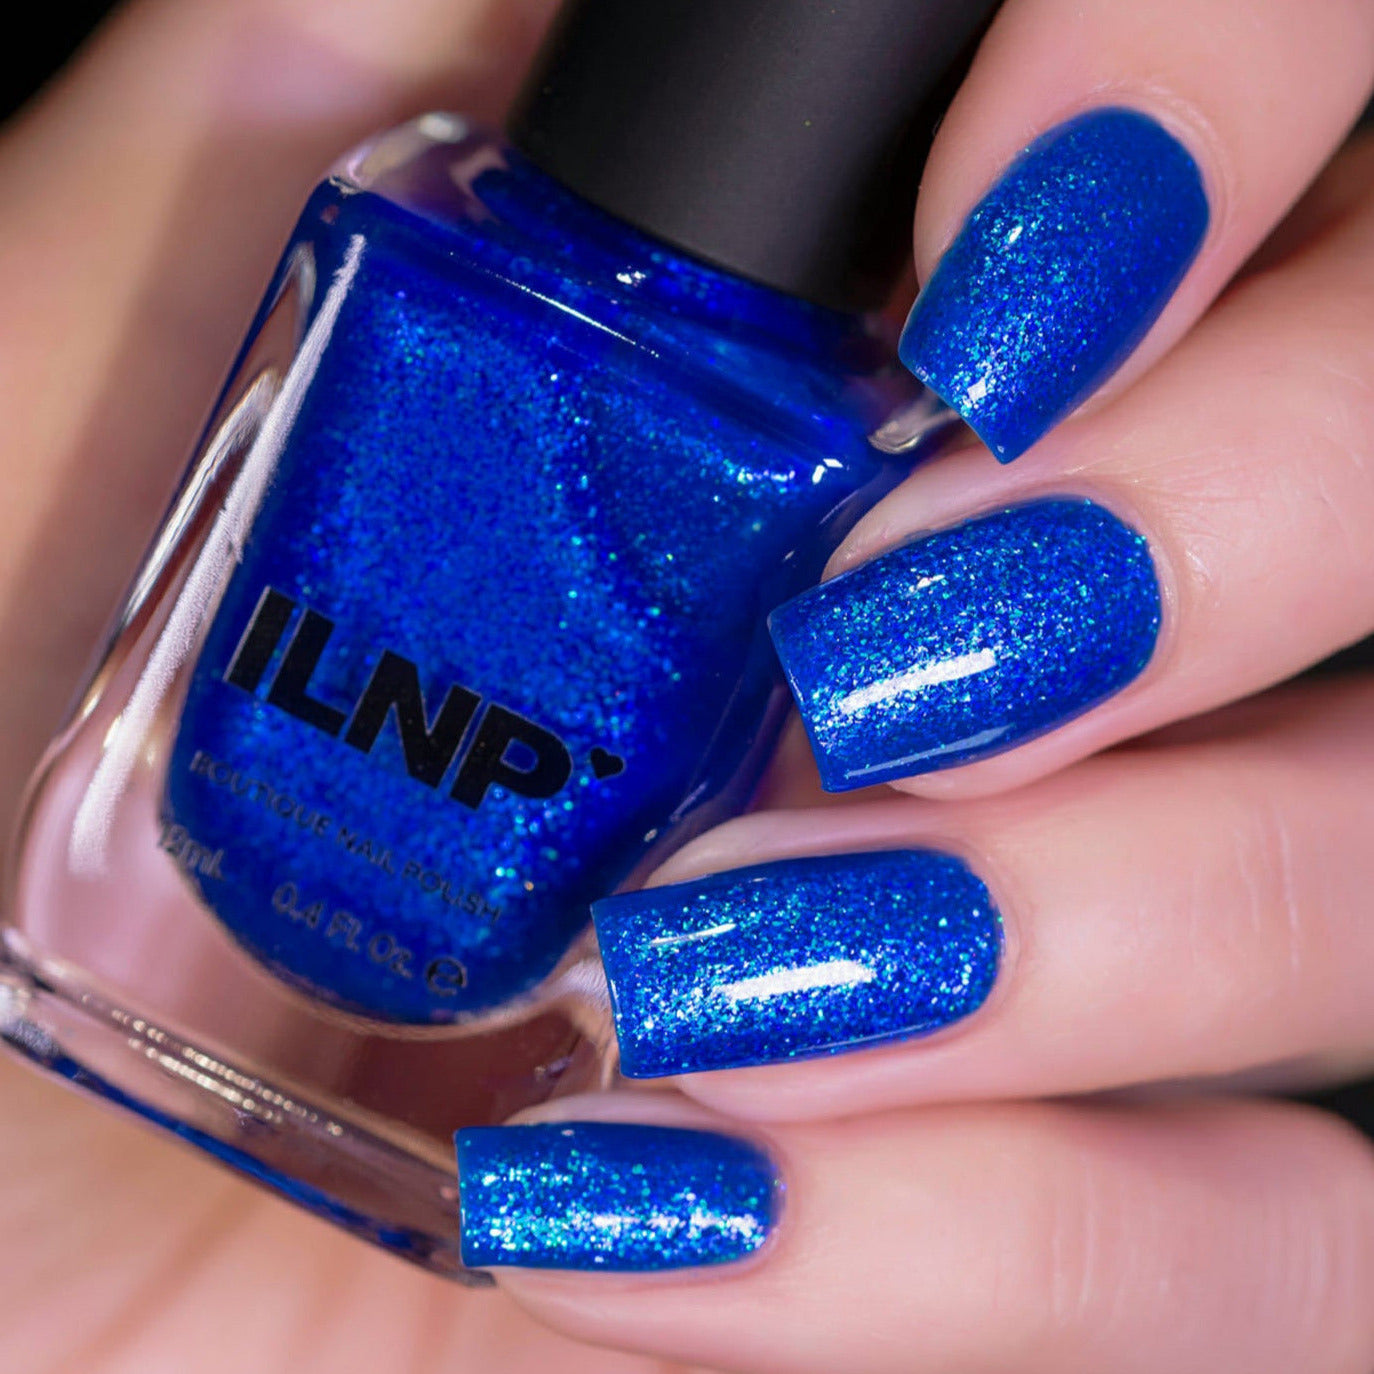 ILNP High Dive - Vibrant Blue-Violet Cream Nail Polish